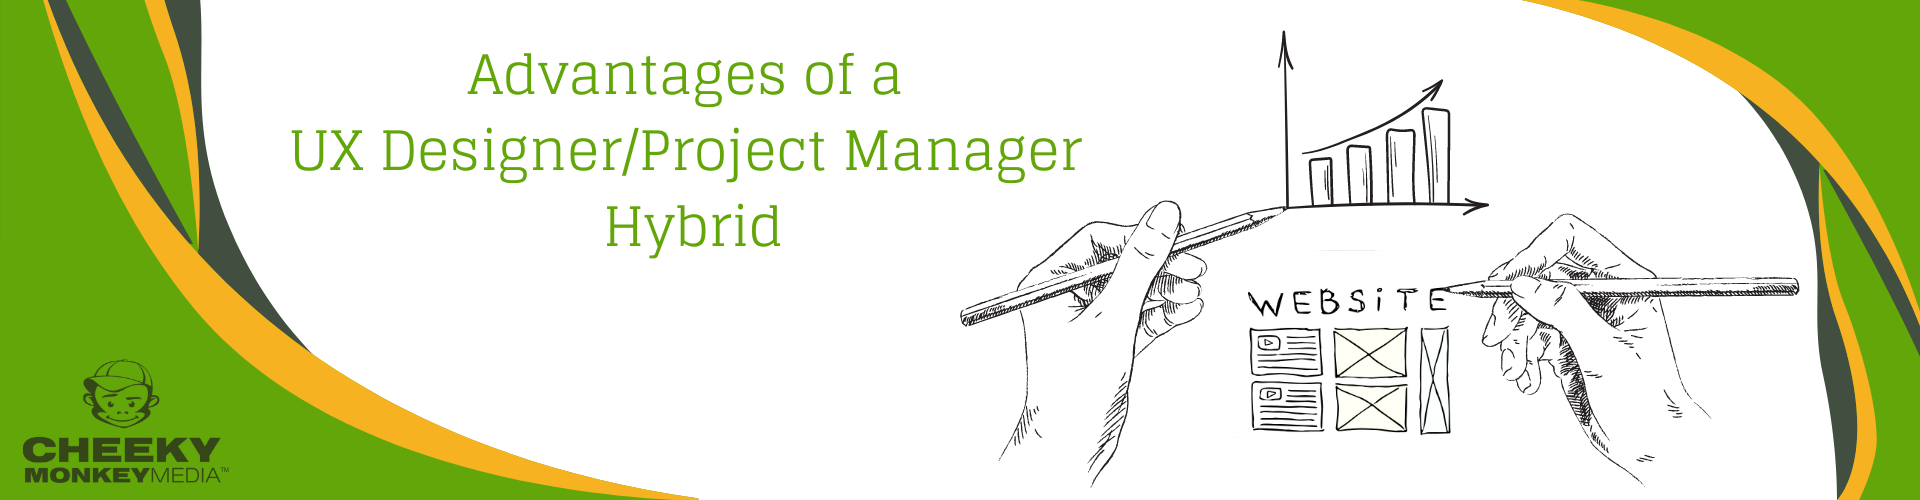 Advantages of a UX Designer/Project Manager Hybrid